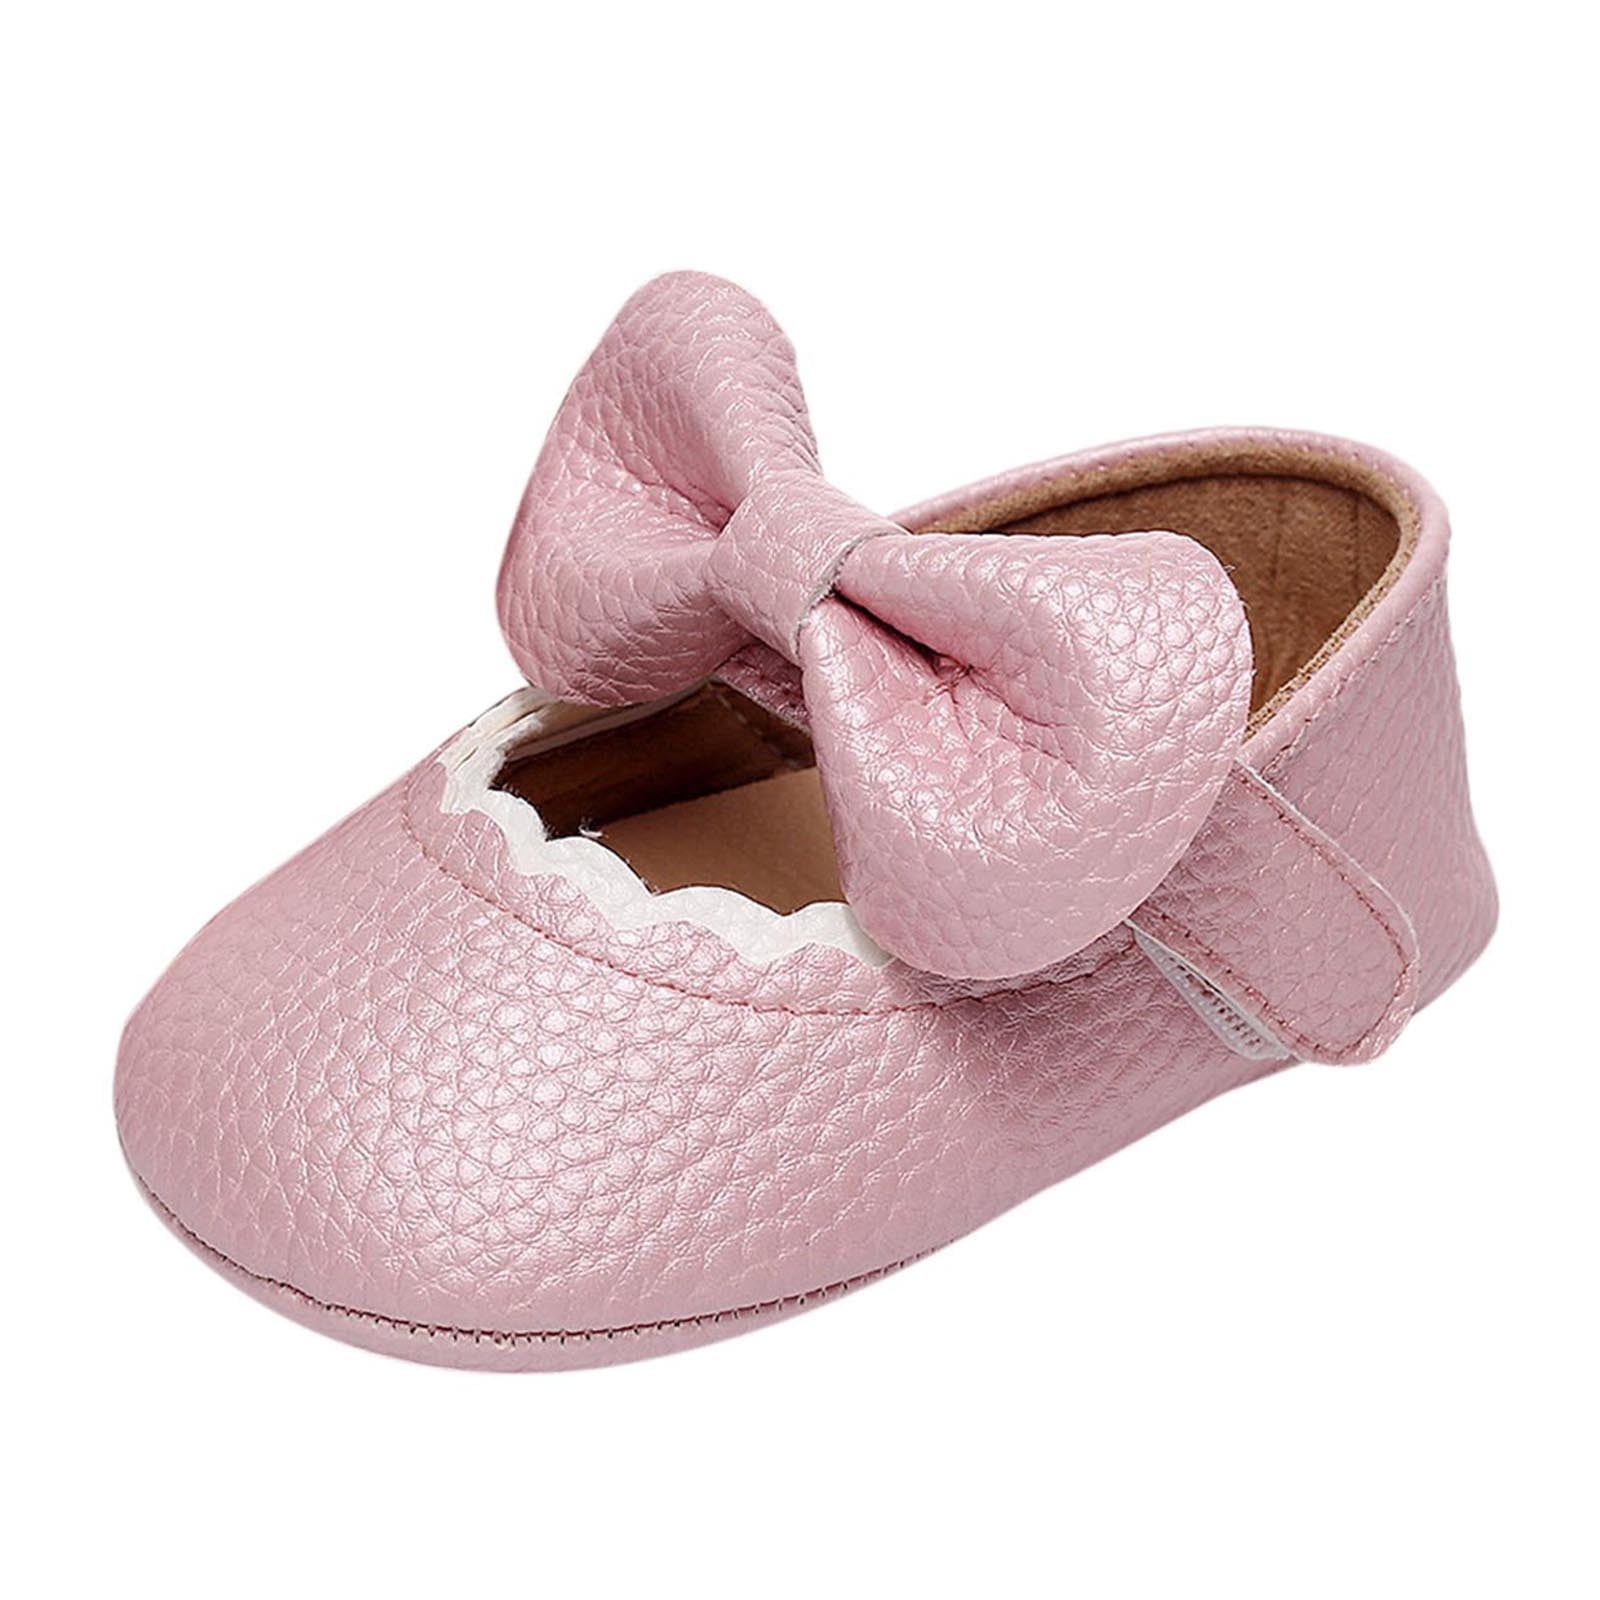 Toddler Kids Girls Shoes Bowknot Flower Sole Walking Shoes Fulltime TM 